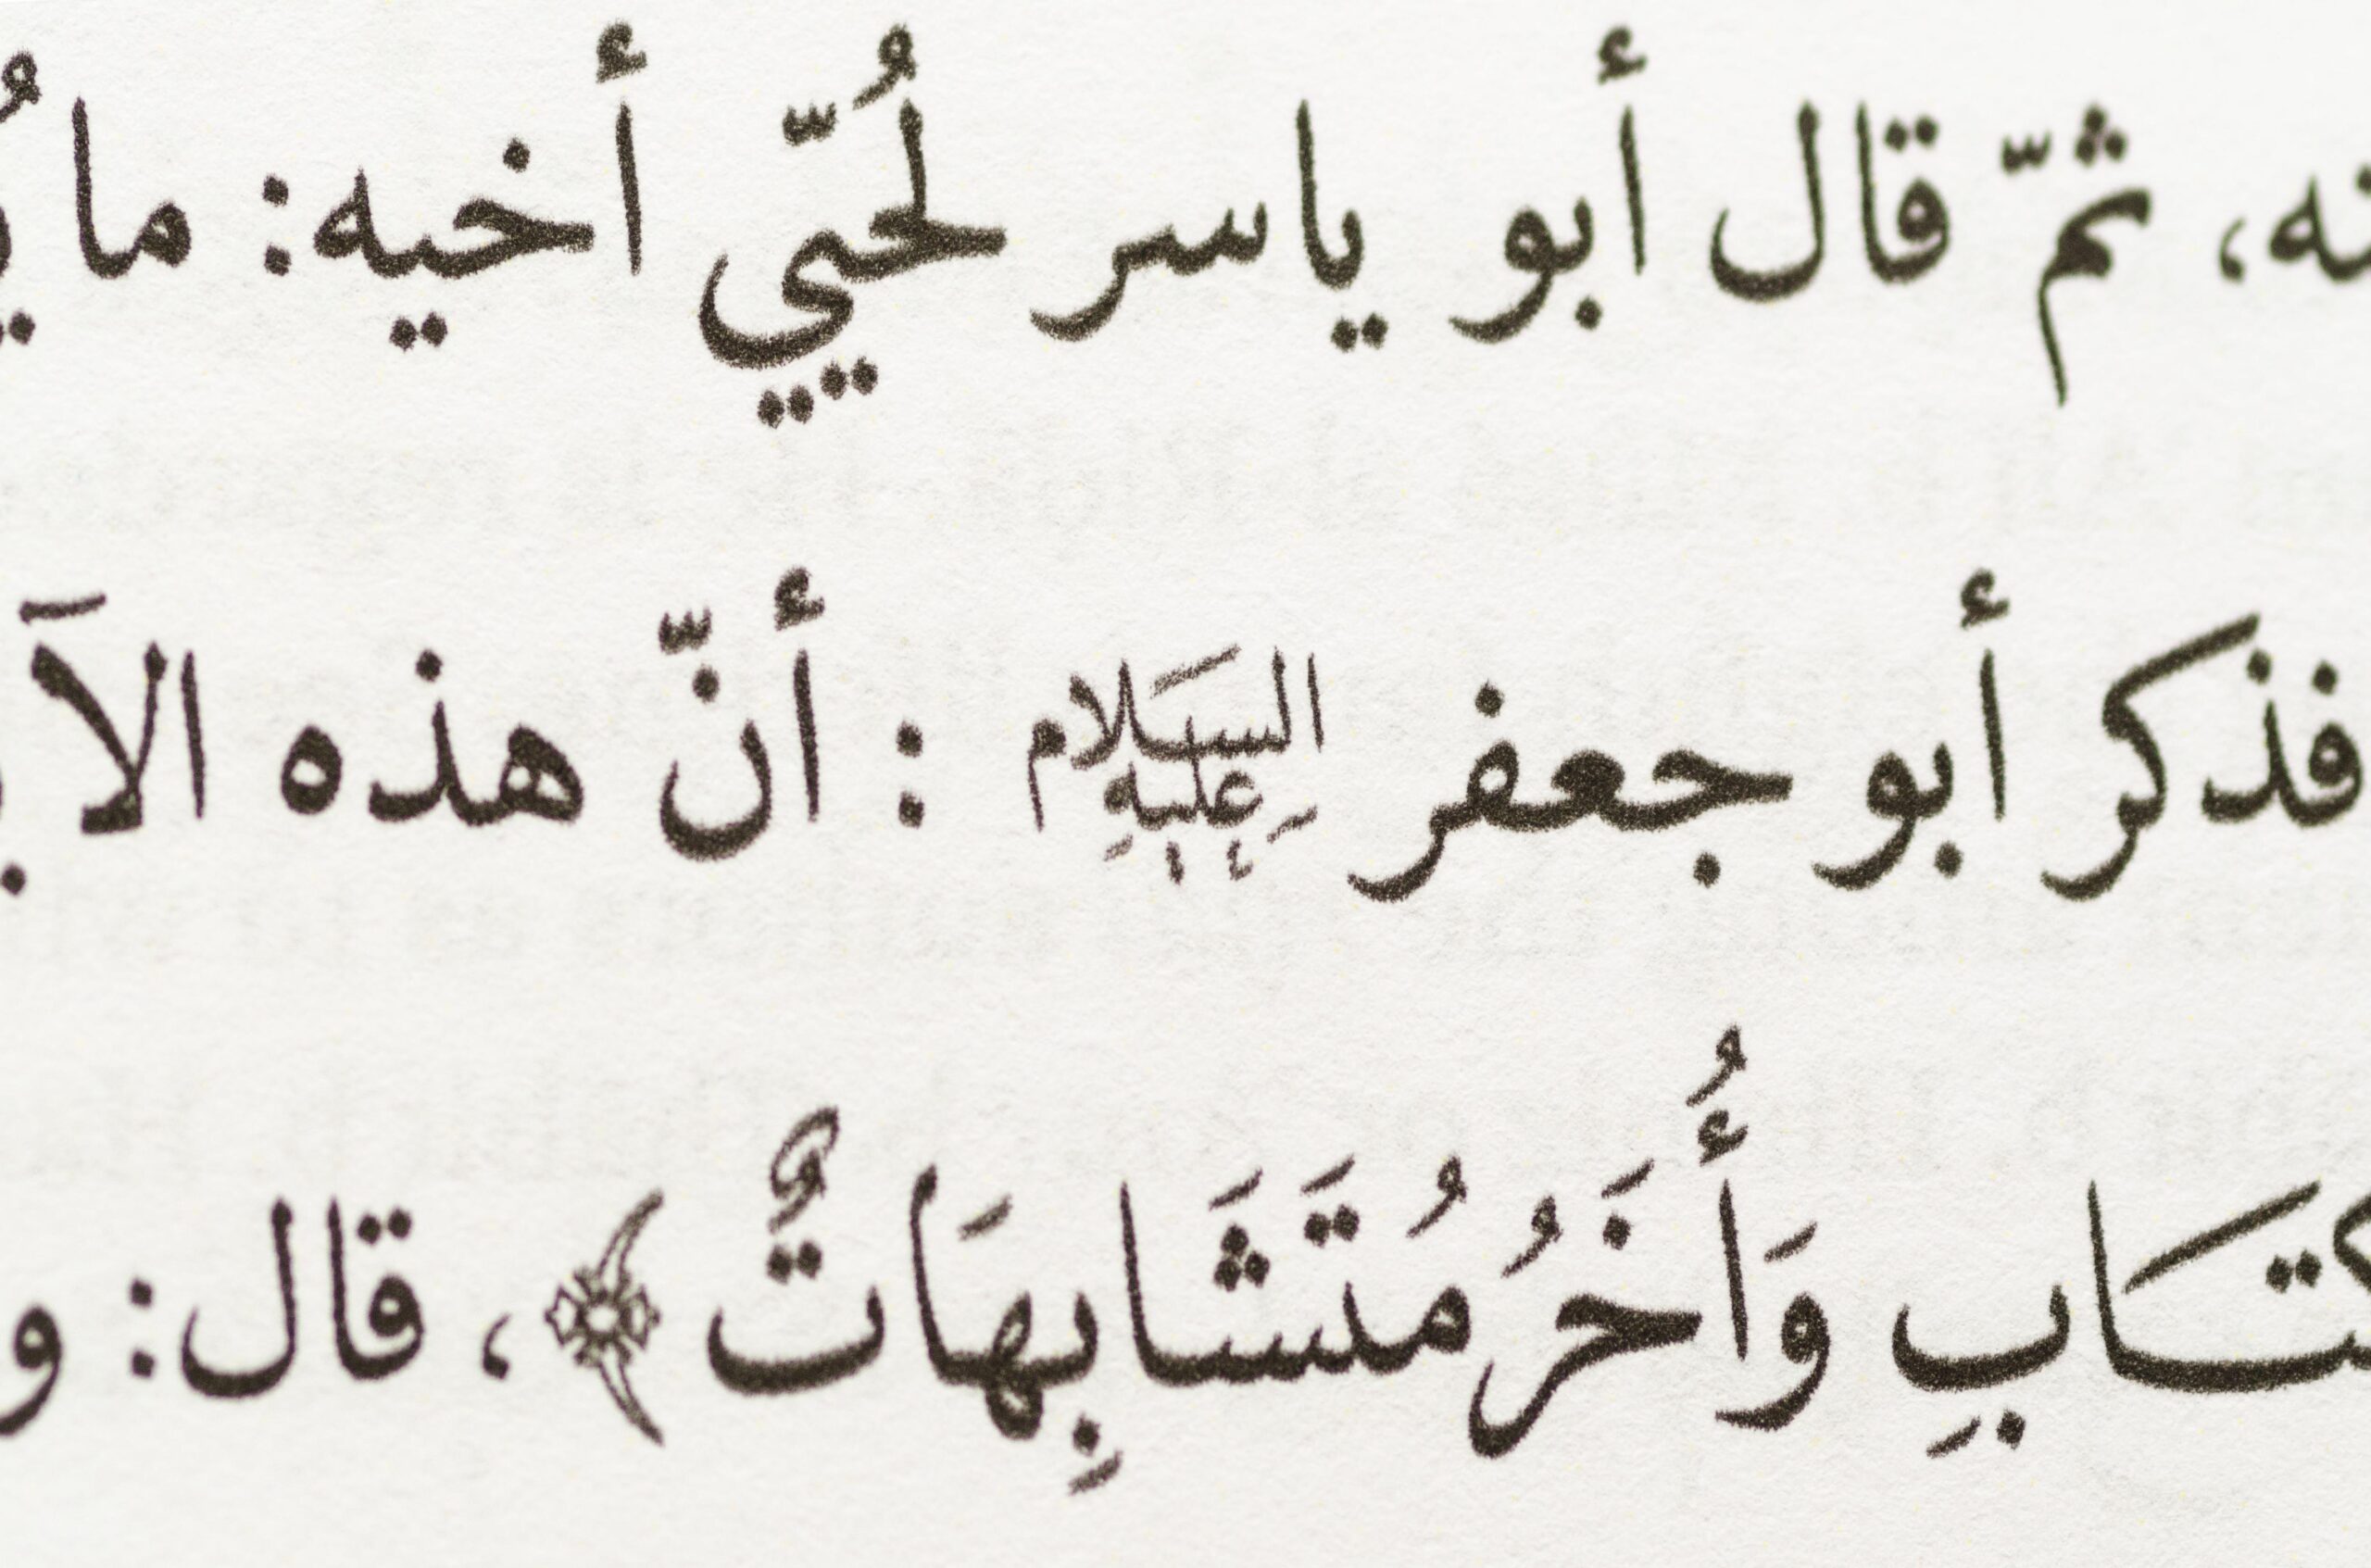 Enlarged detail of Arabic text from the Tafsīr al-ʿAyyāshī.